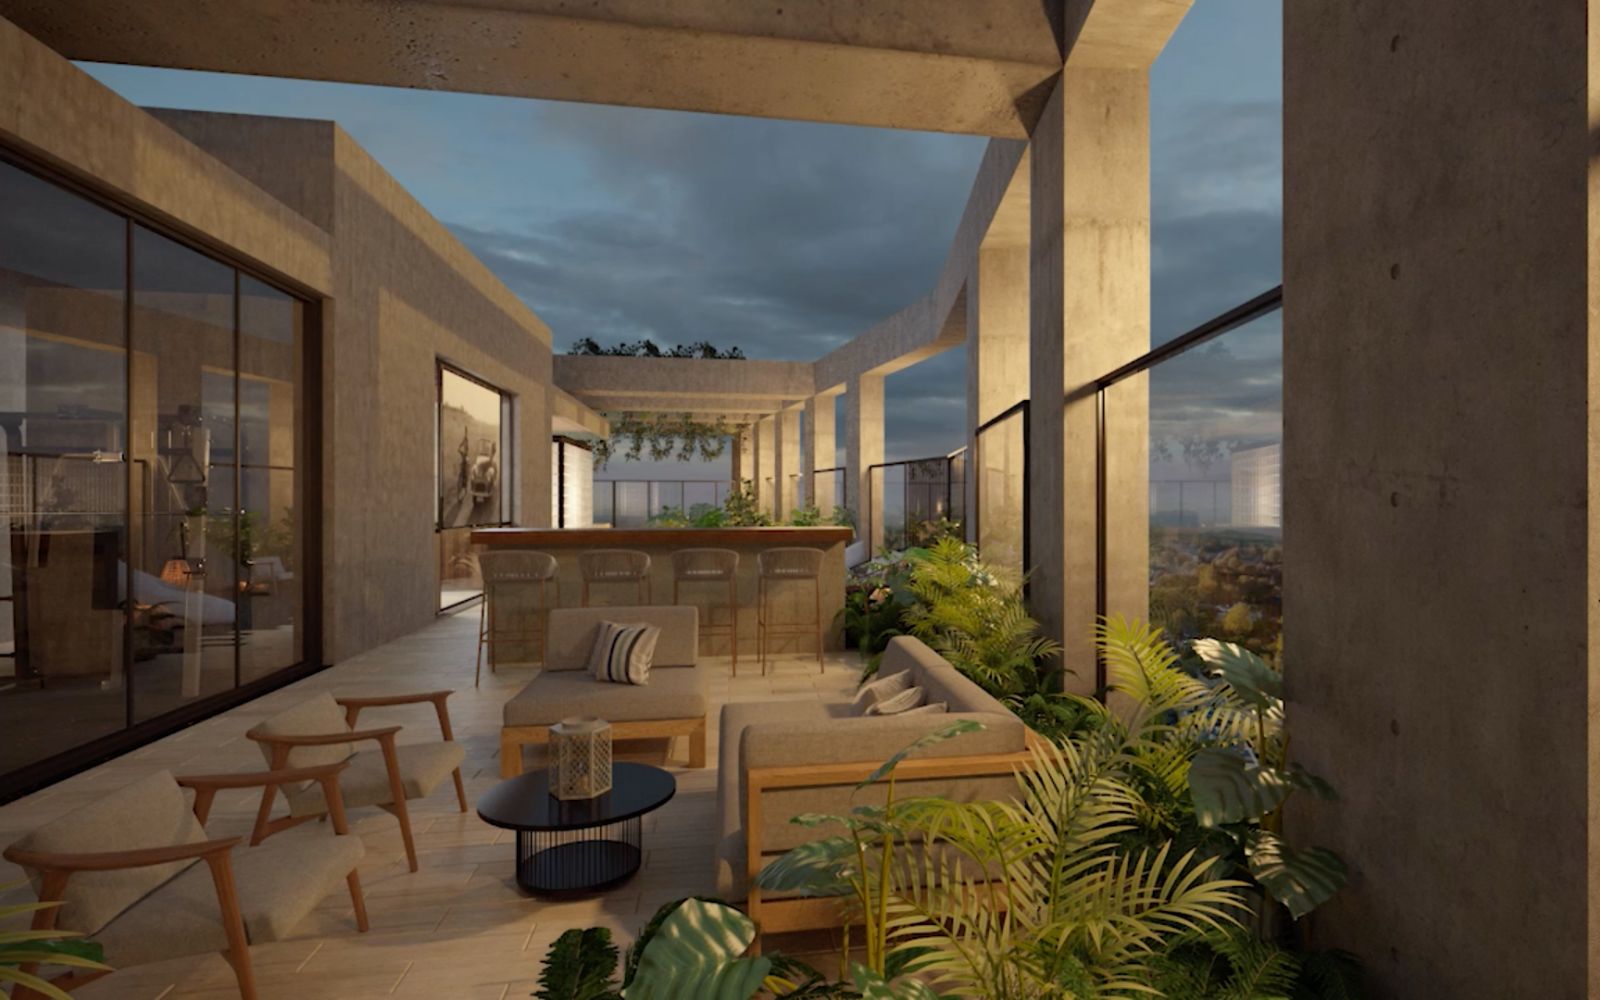 Condo with 2 terraces, jacuzzi, pool, pet zone, for sale Interlomas Mexico City